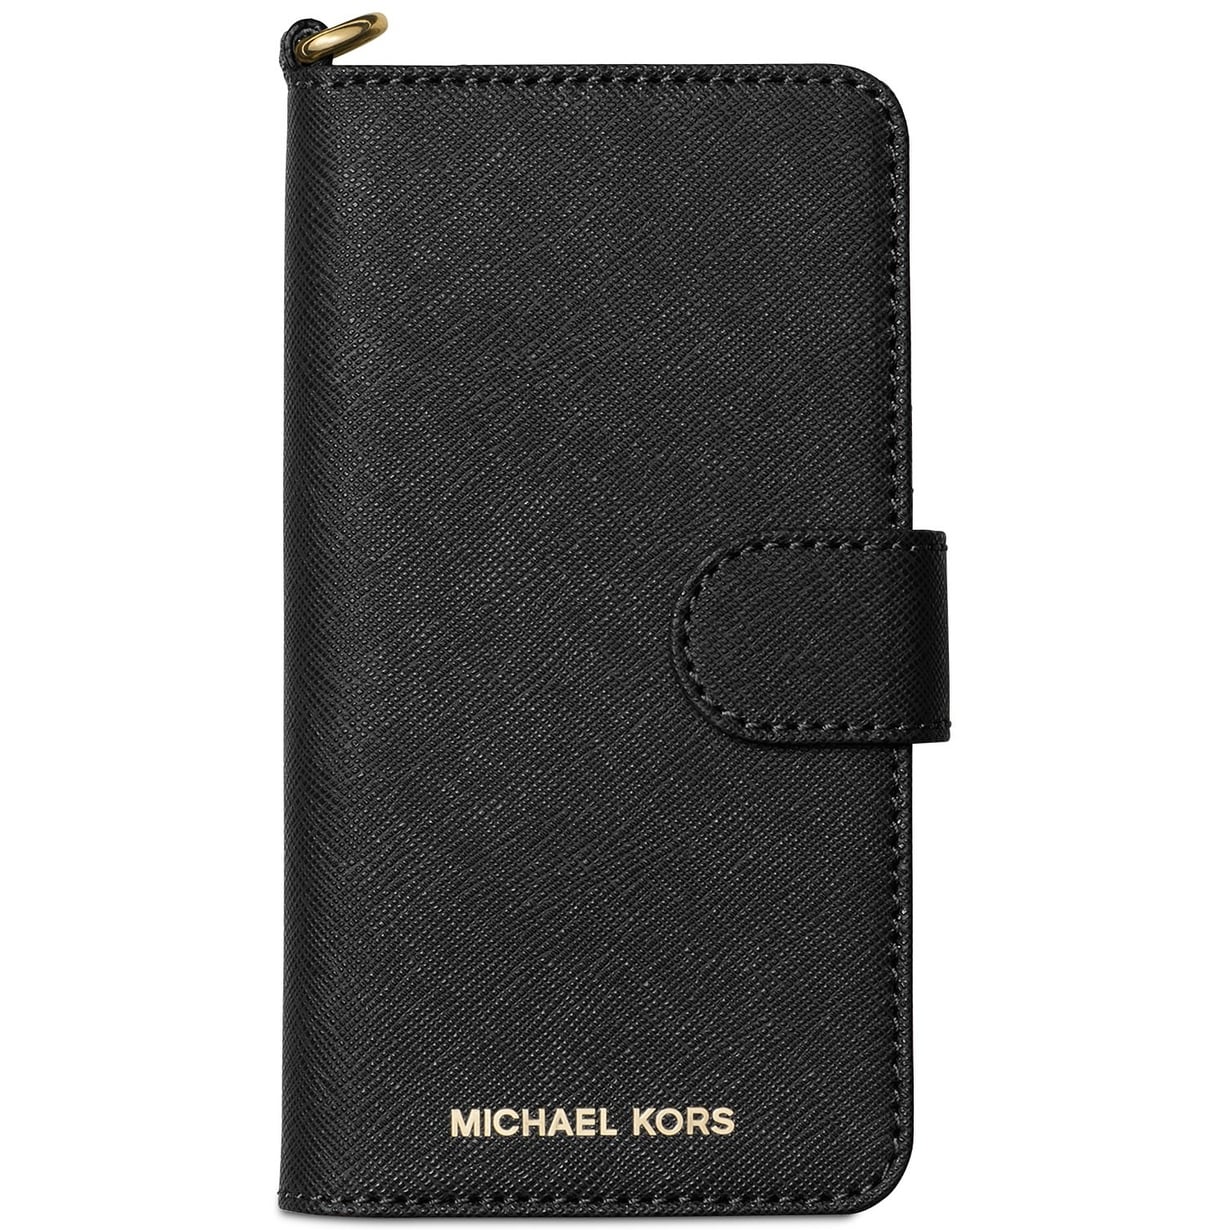 michael kors mobile phone wallet